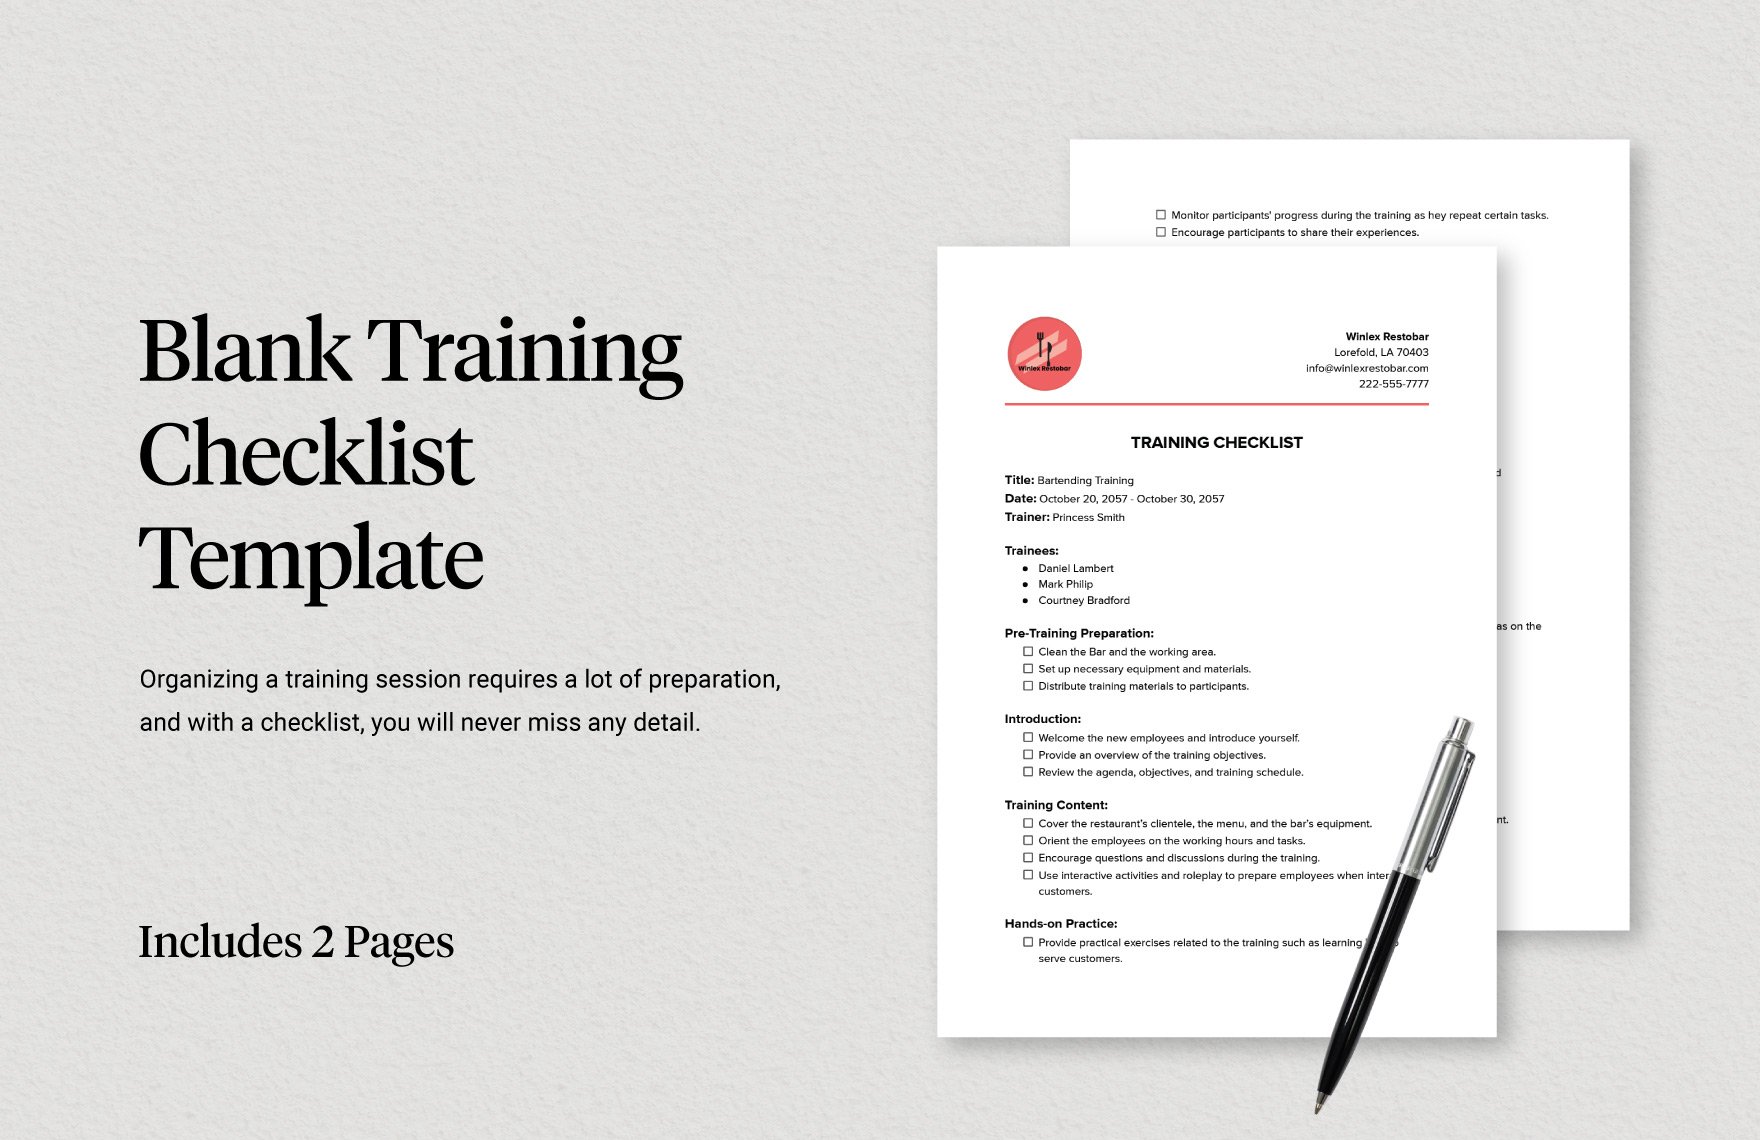 Blank Training Checklist Template